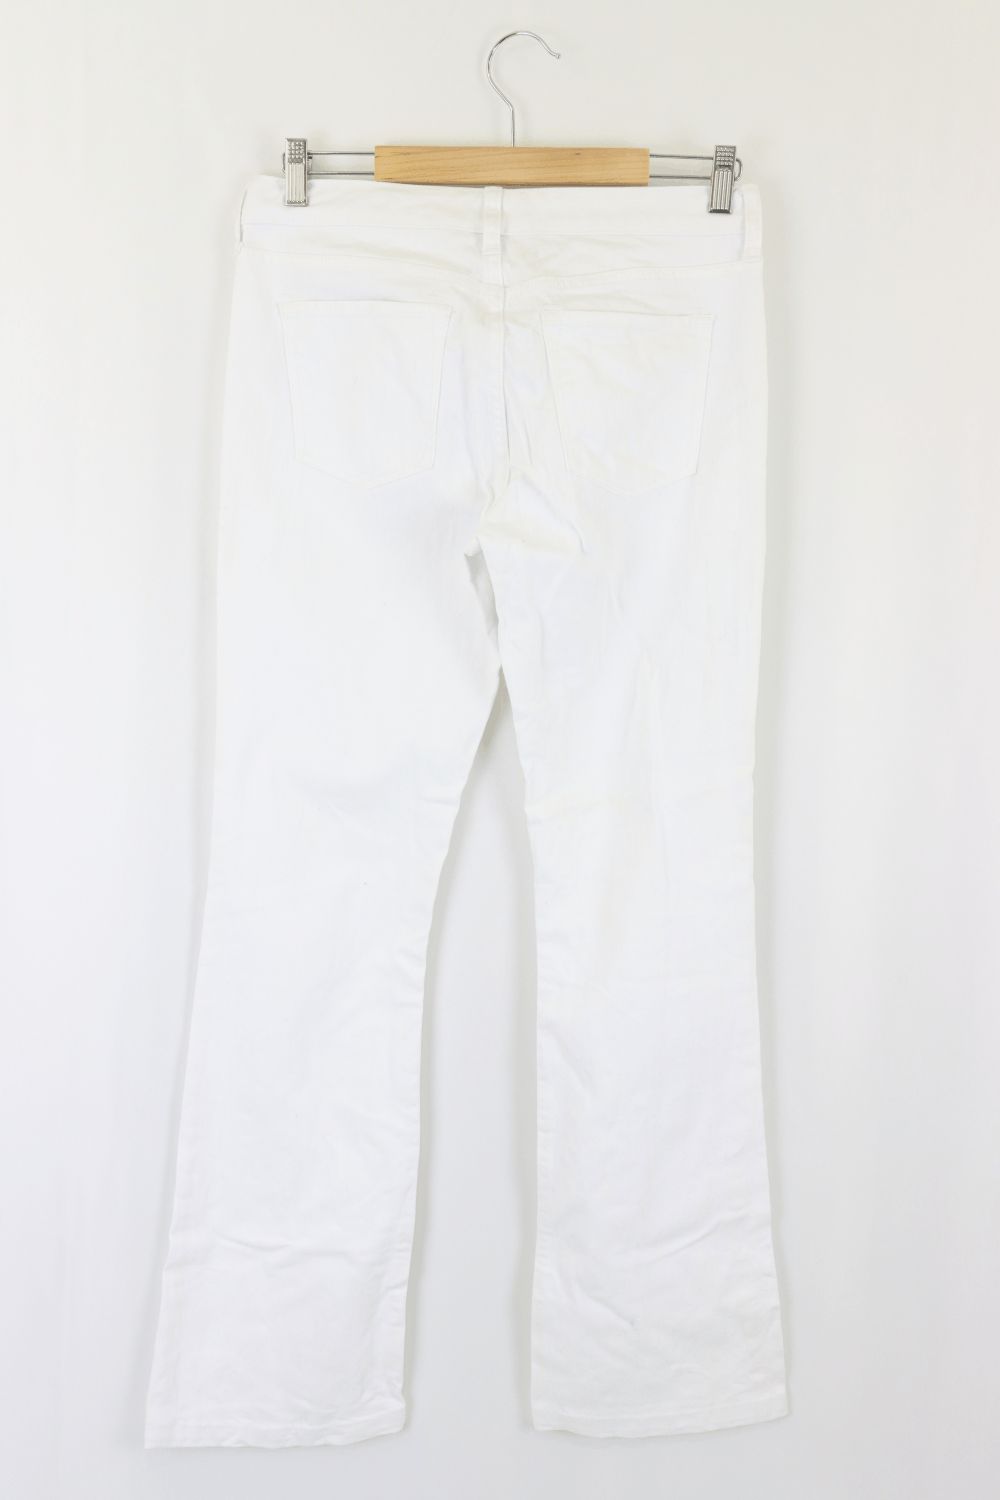 Banana Republic White Jeans 4